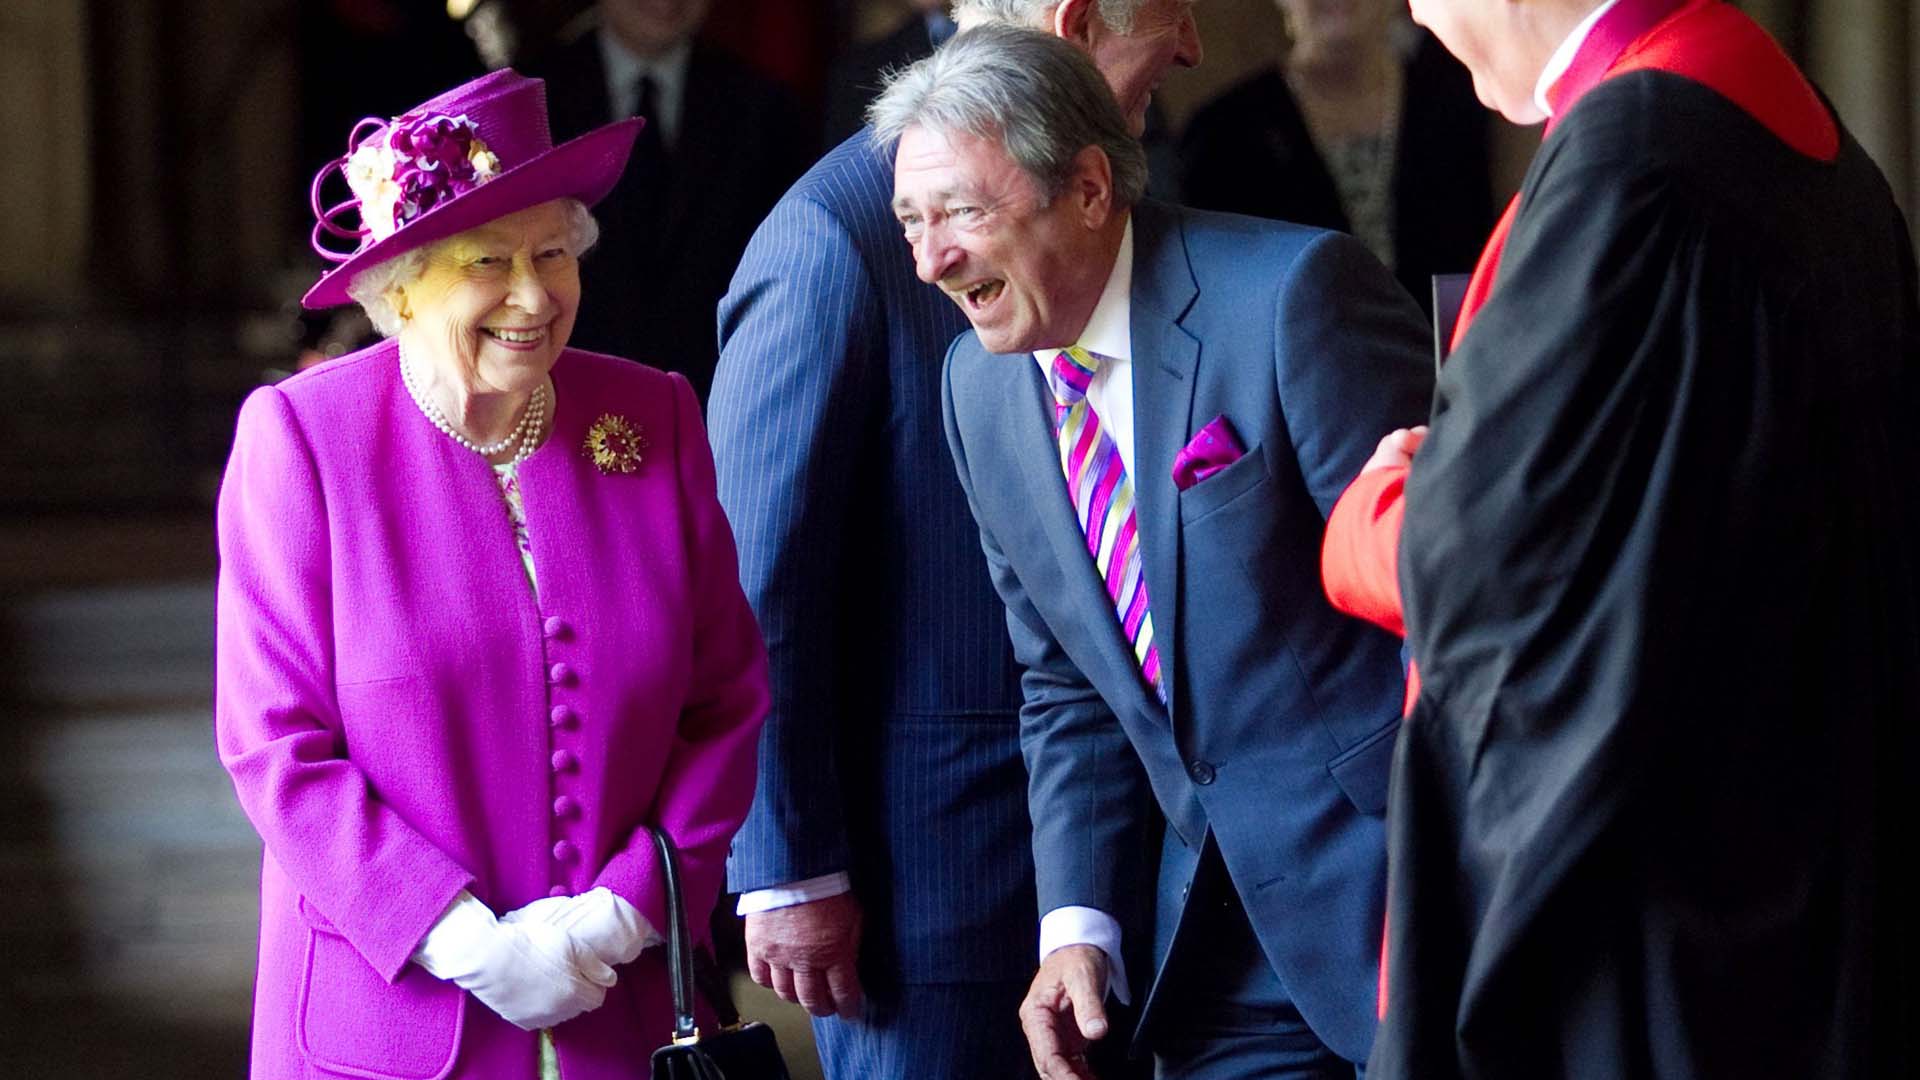 Queen Elizabeth II and Alan Titchmarsh enjoy a joke together outside Westminster